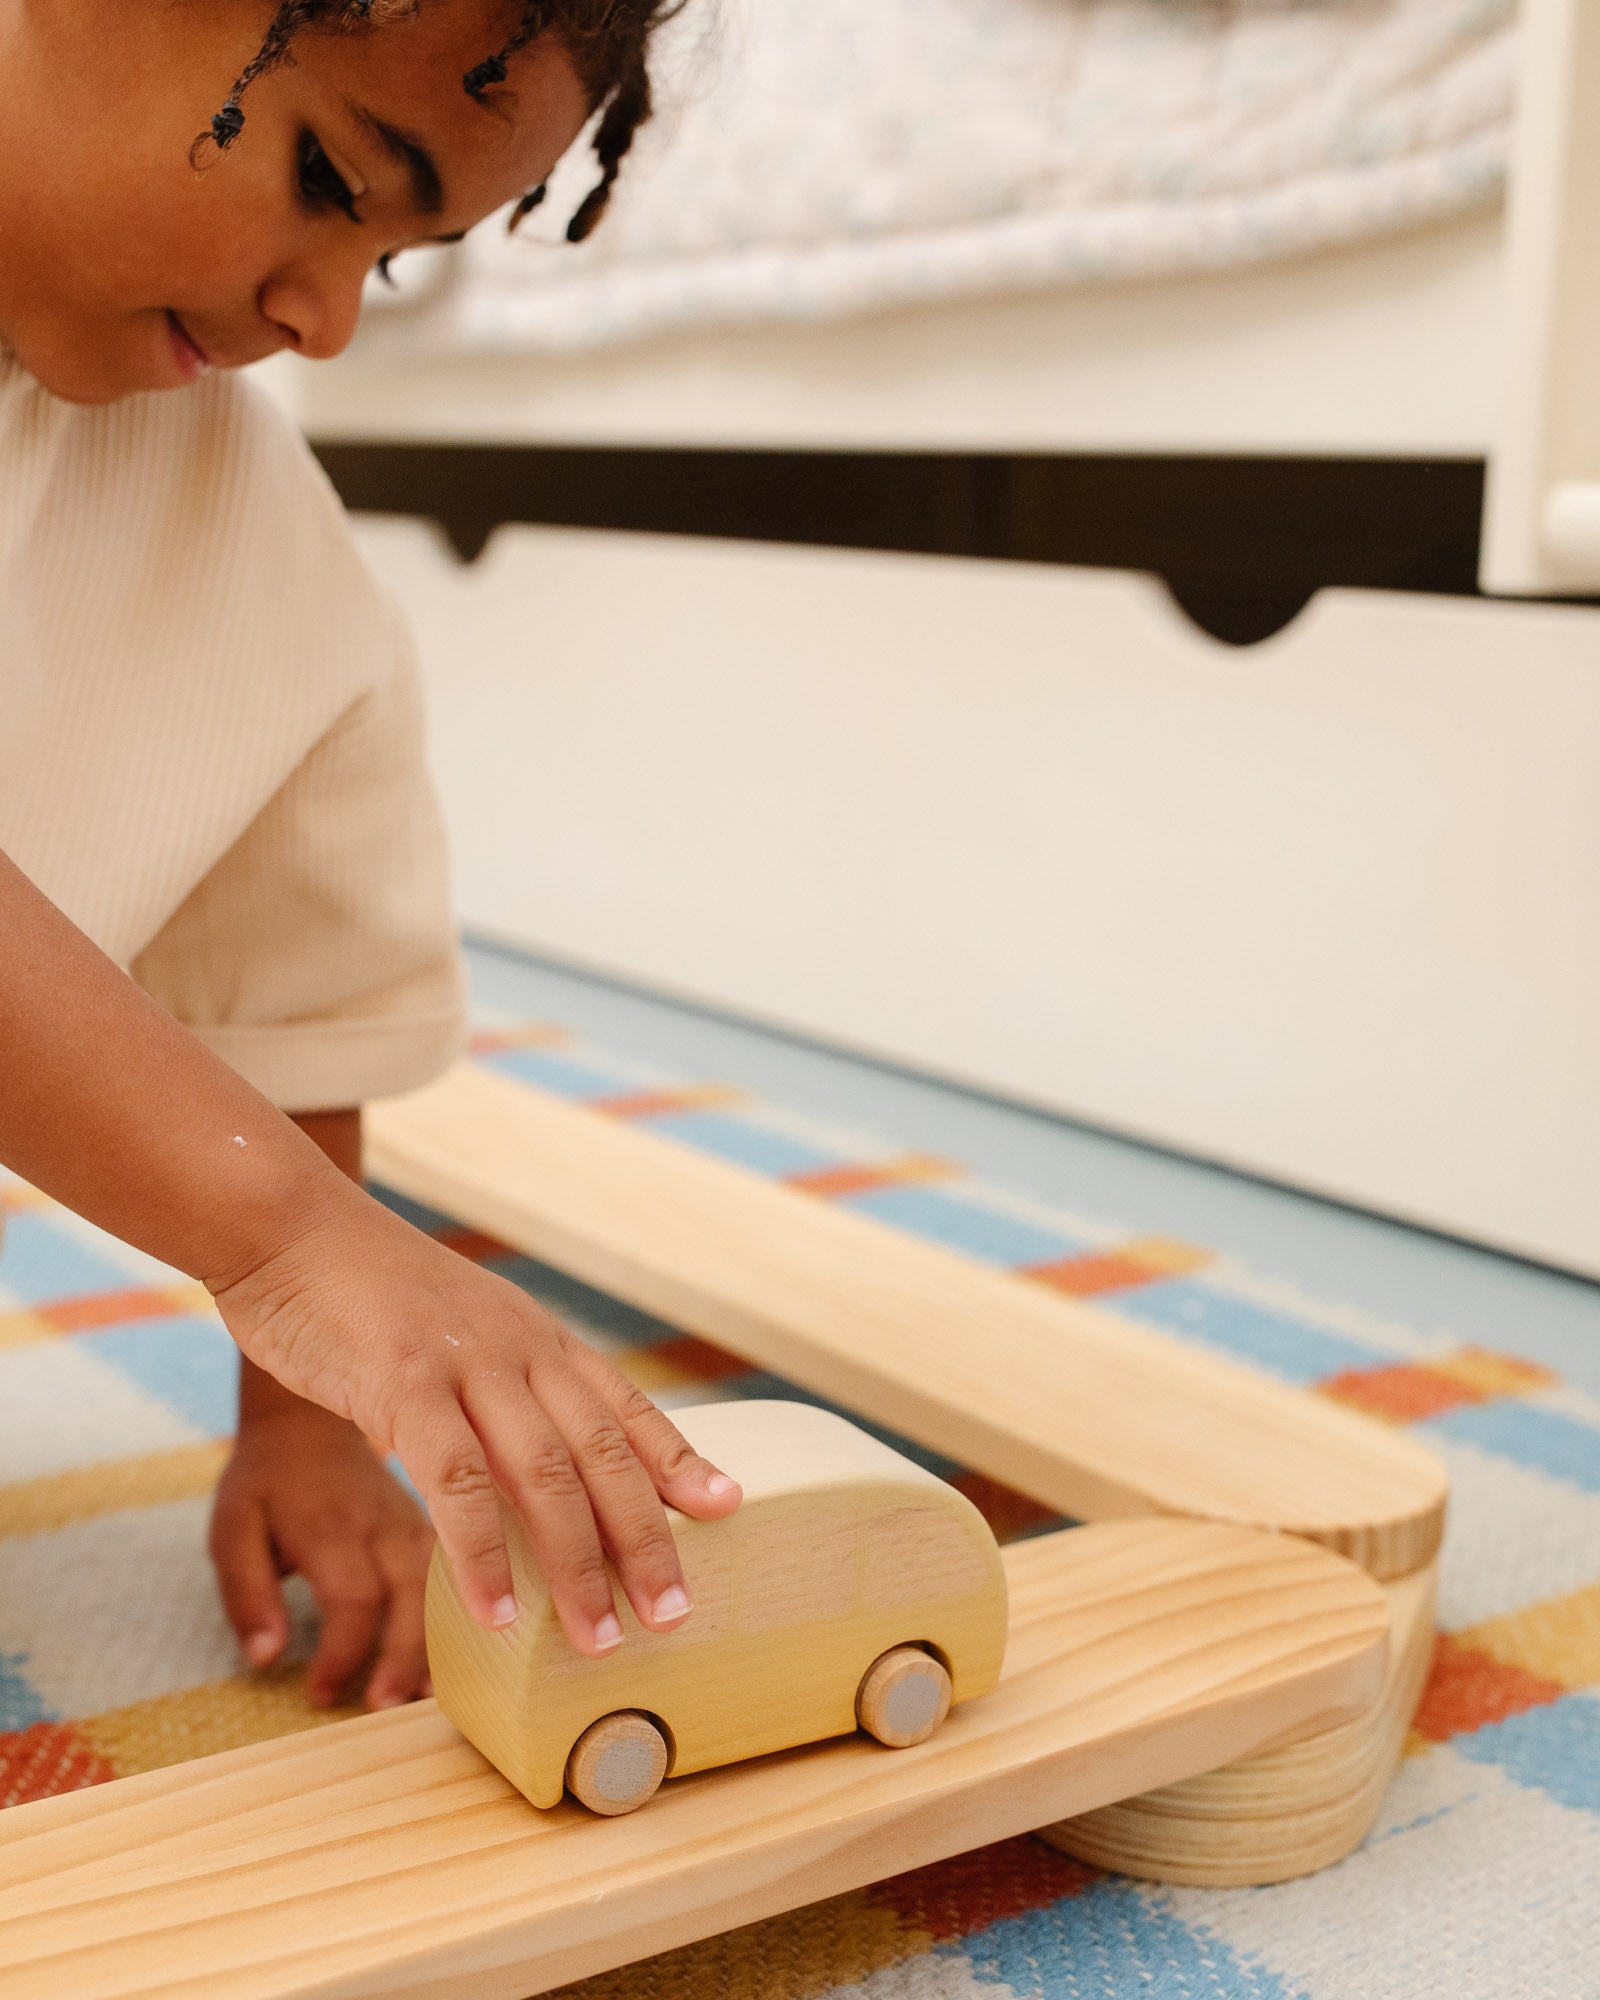 Jouet en bois montessori - WoodBalance™ – L'Enfant Malin